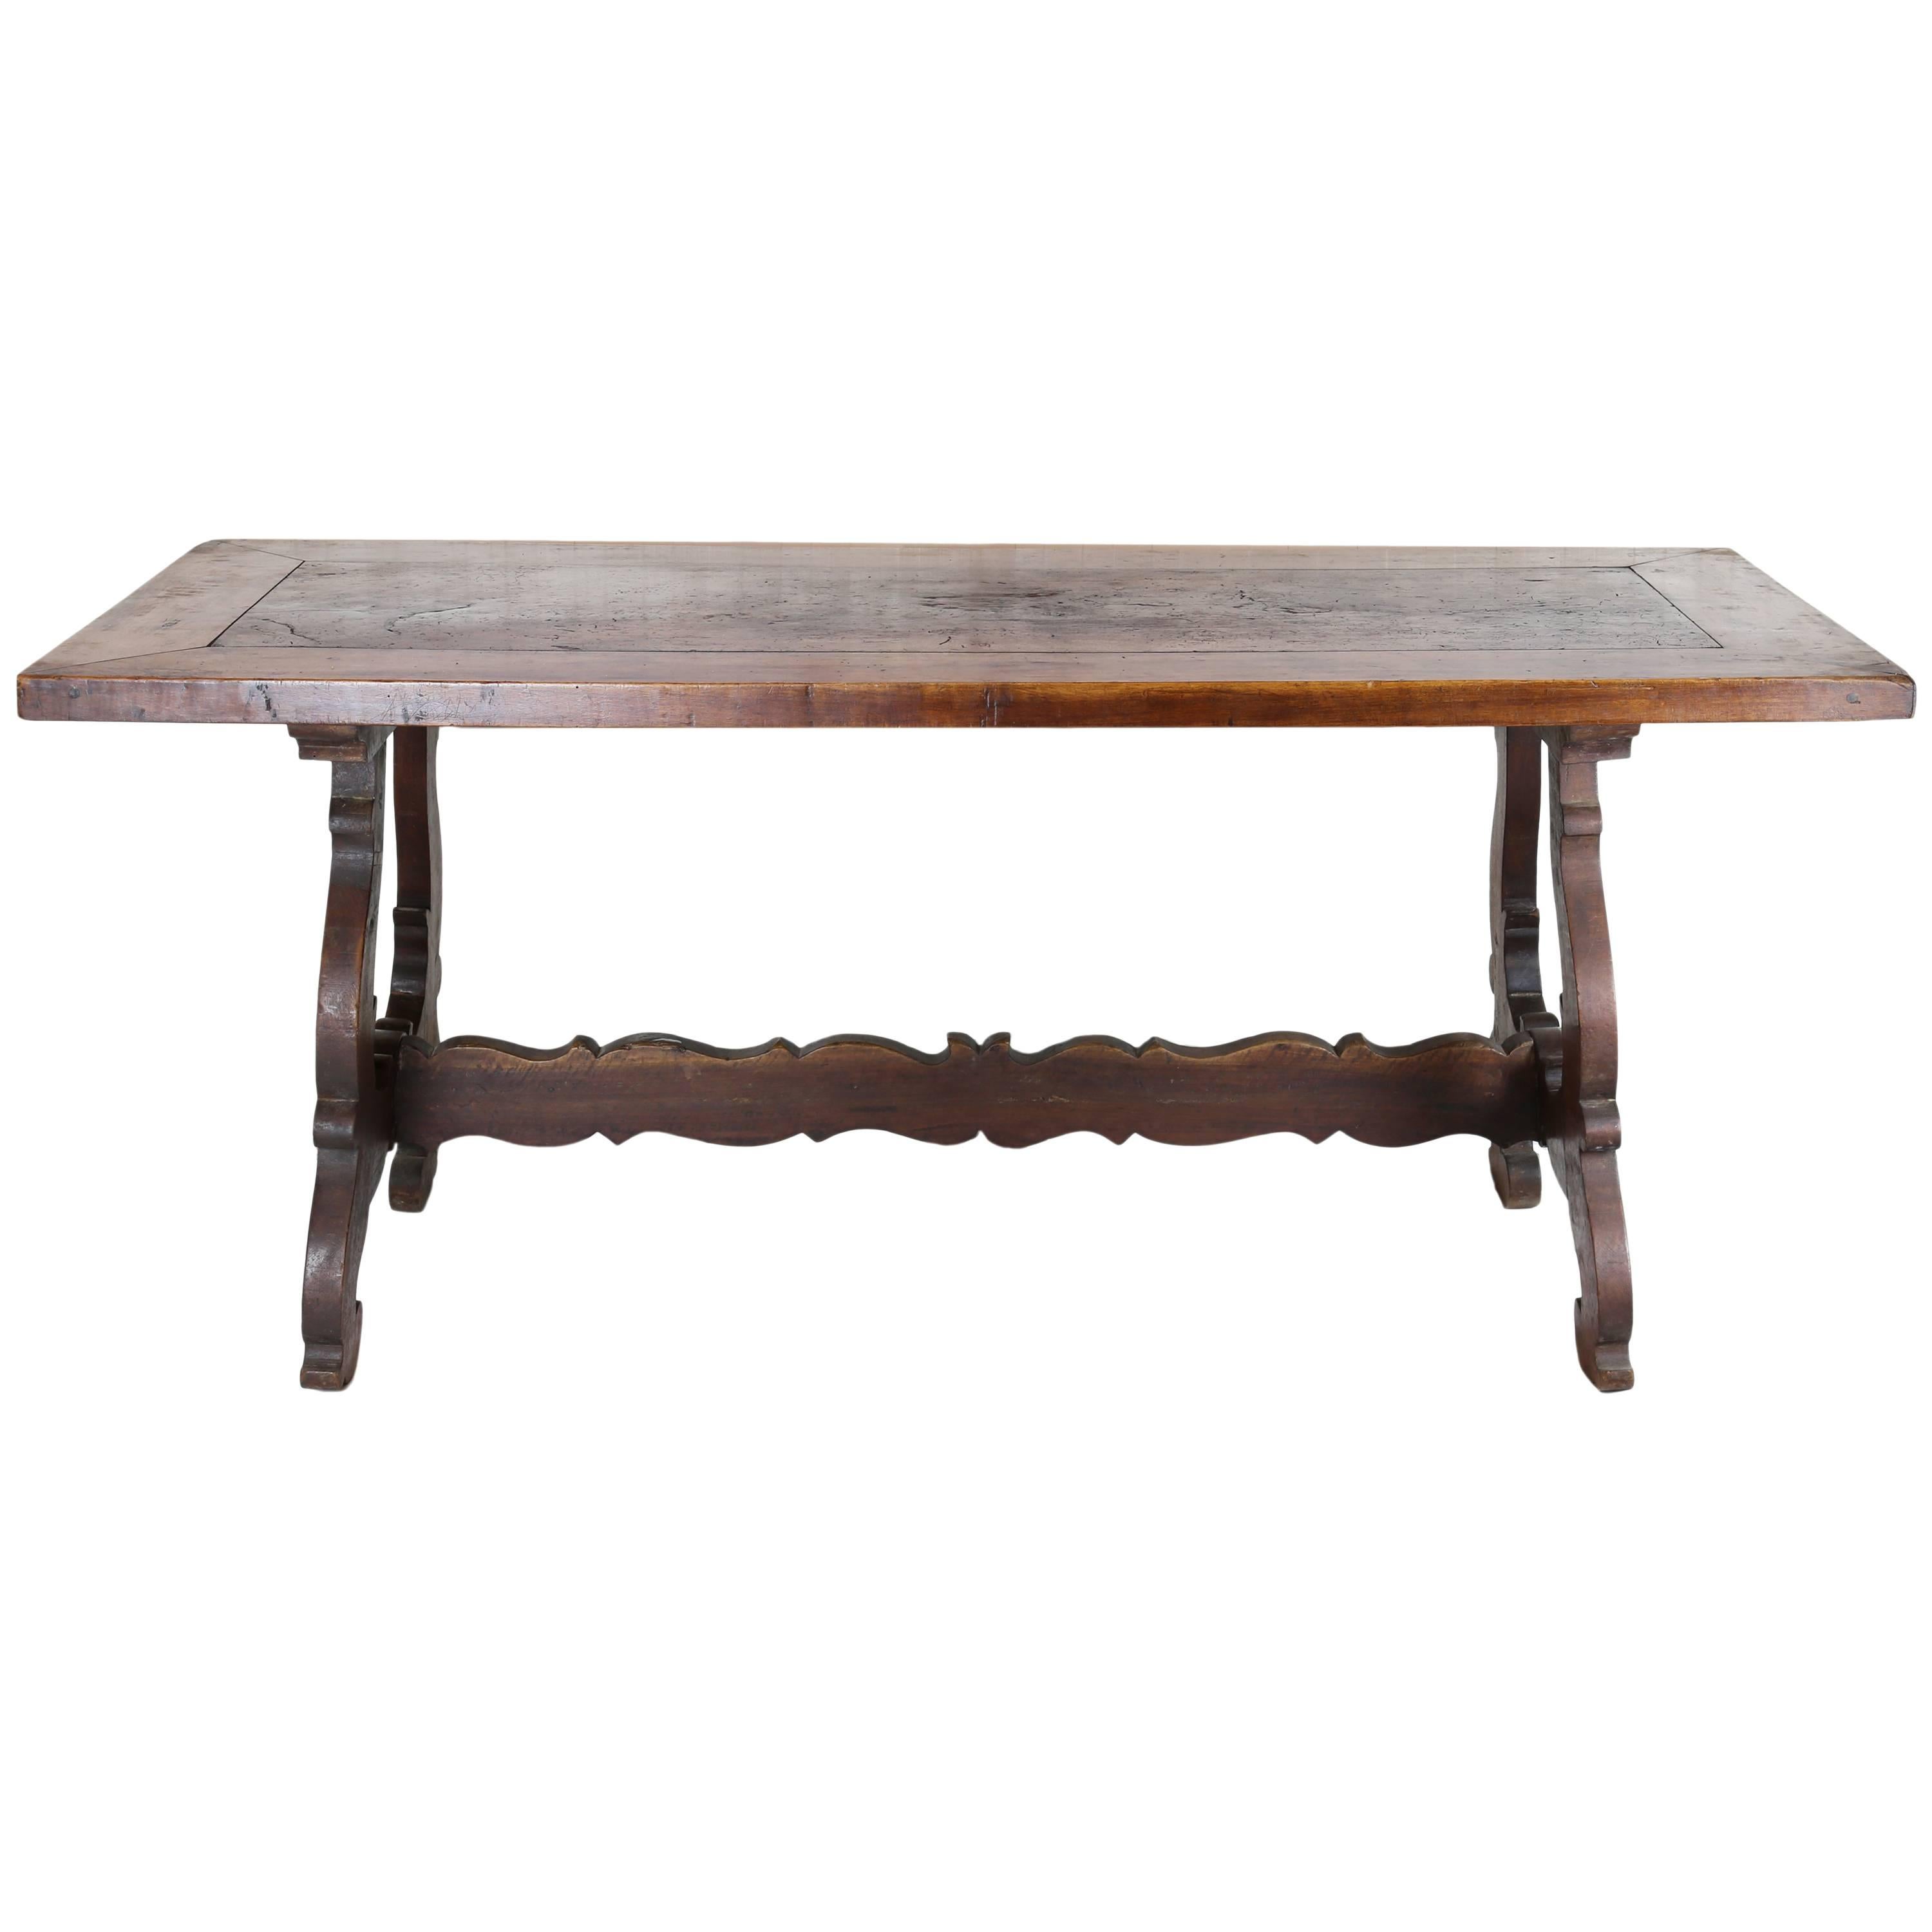 Walnut Trestle Table, Italian Baroque Style